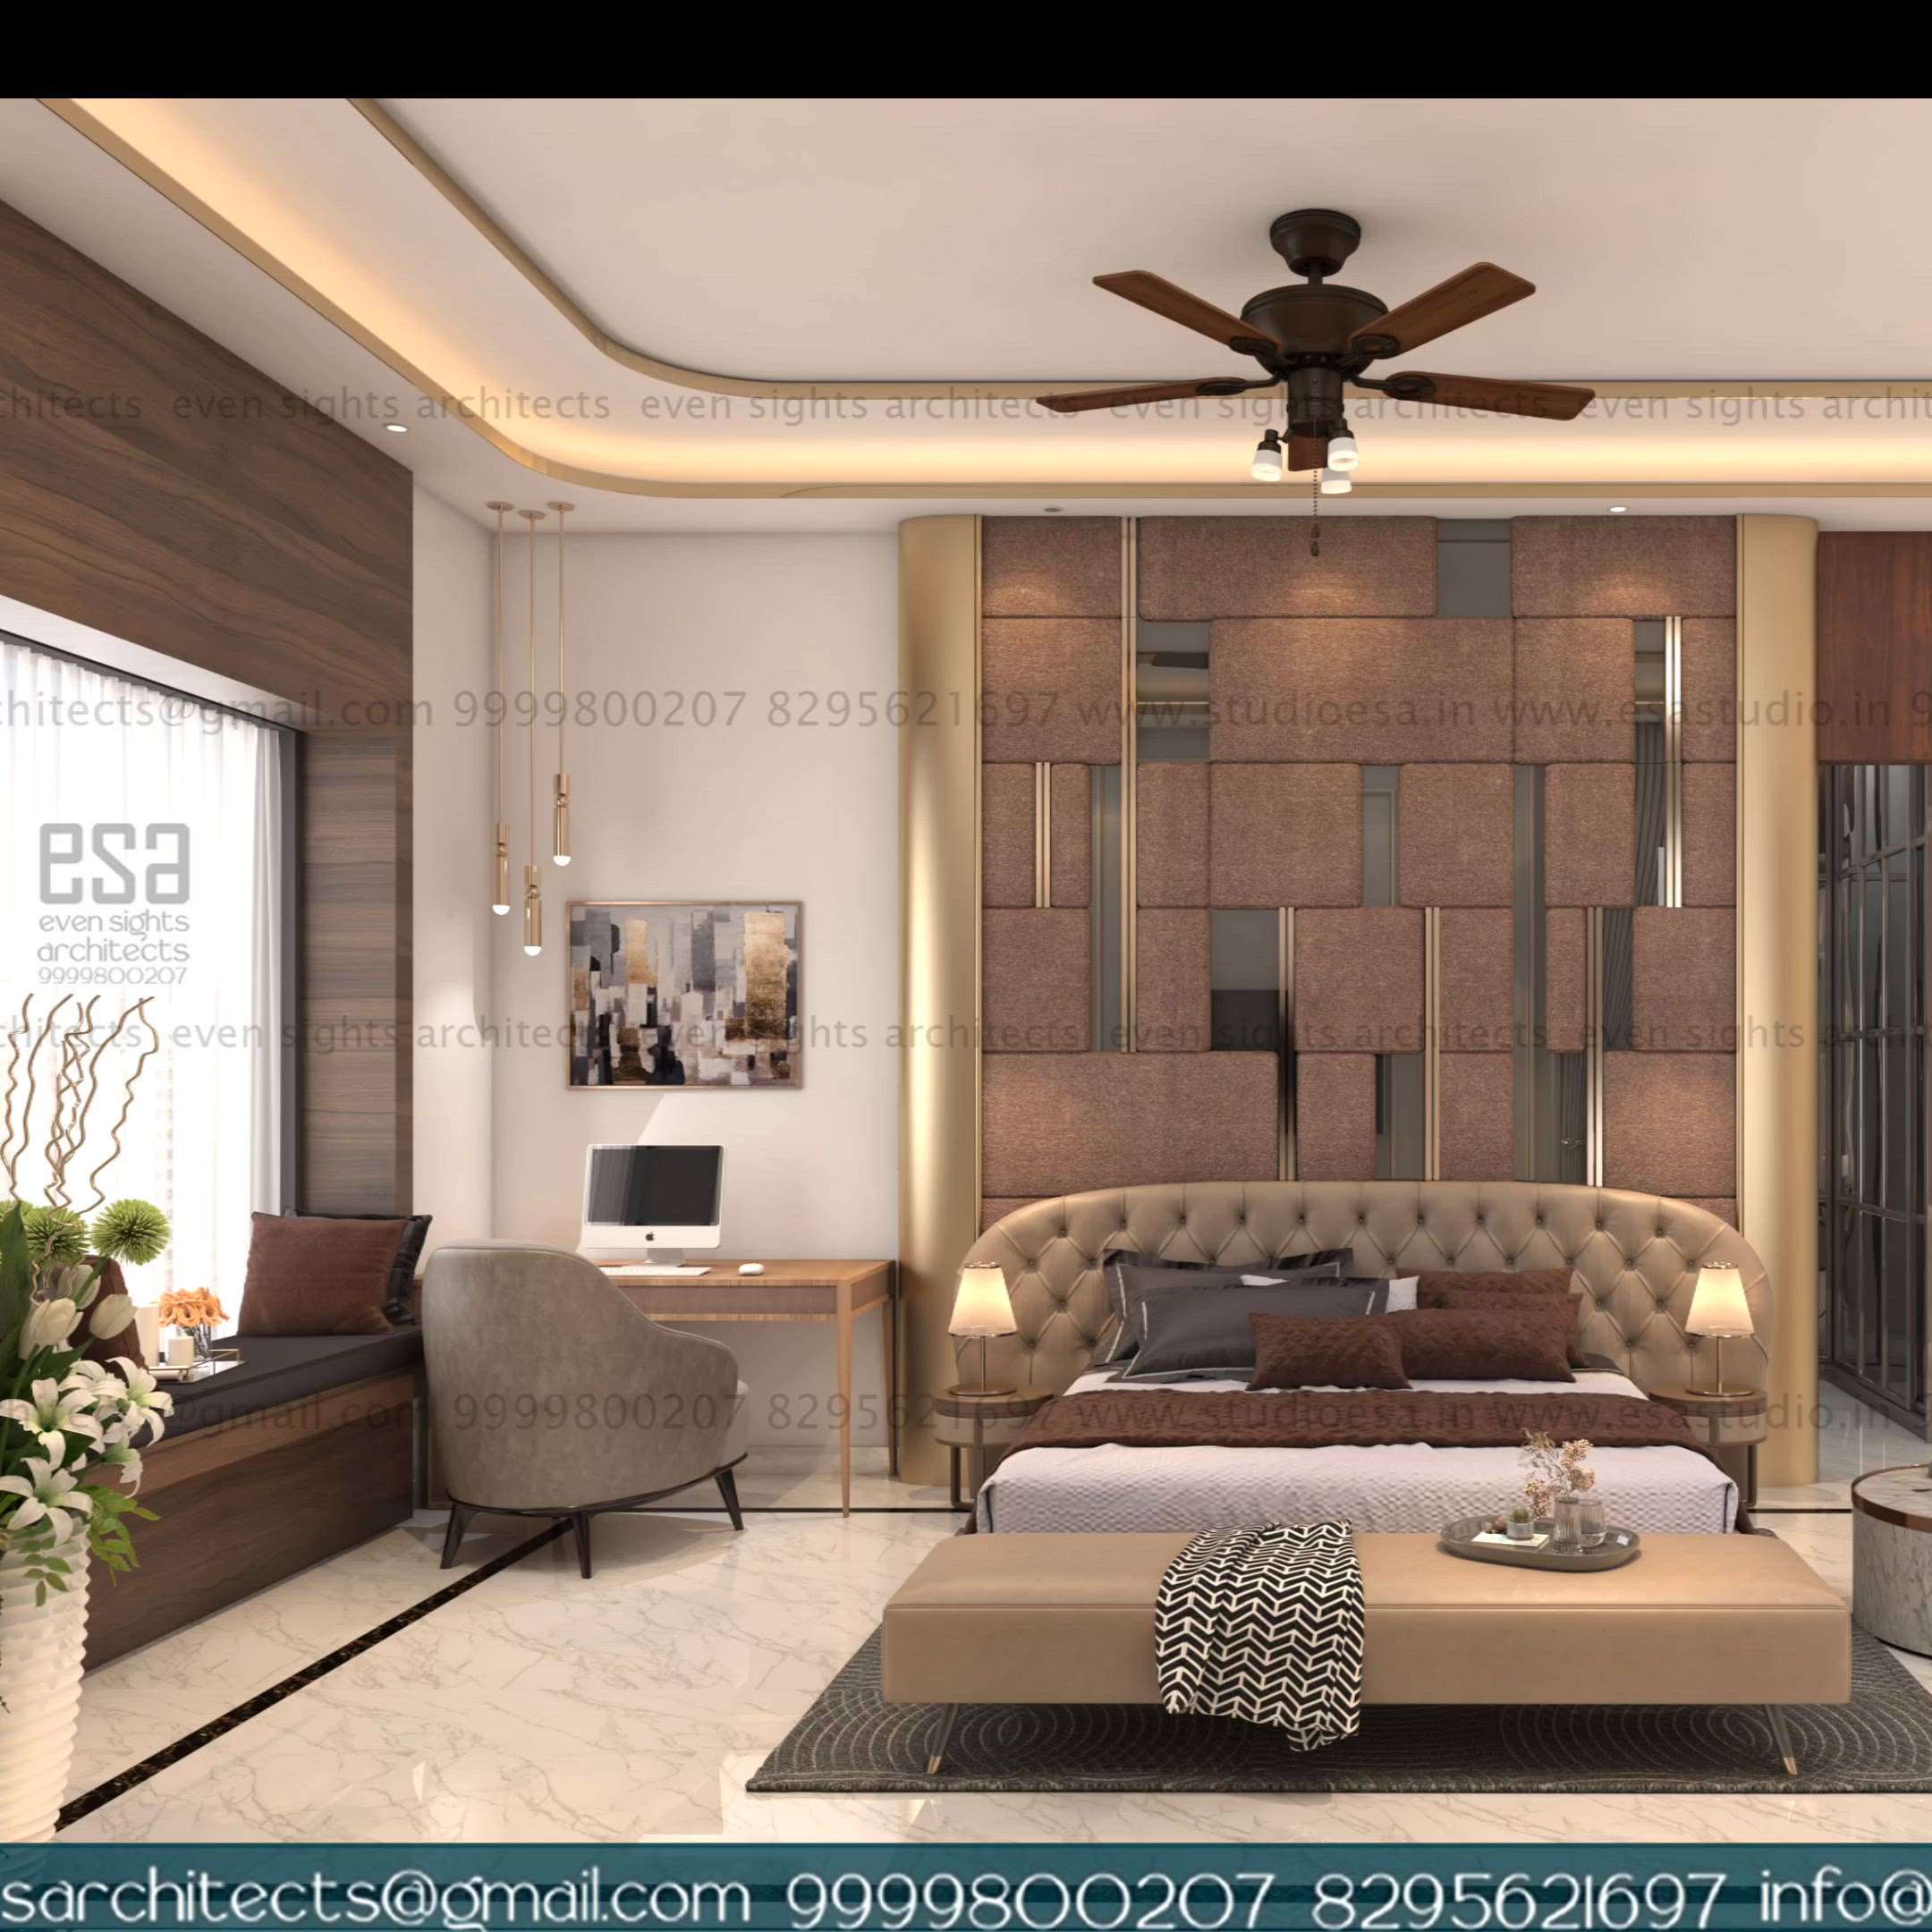 #InteriorDesigner #interiordesign  #MasterBedroom #masterbedroomdesinger #masterbedroom3ddrawing #BedroomDecor #KingsizeBedroom #BedroomDesigns #bedroominteriors #MasterBedroom #Delhihome #delhiinteriors #delhiarchitects #delhiinteriordesigner #Architectural&Interior #LUXURY_INTERIOR #LUXURY_BED #luxuaryrealestate #luxuryhomedecore #luxuryvillas #luxuryinteriors #luxurybedroom #luxurybedrooms #BedroomIdeas #interiorghaziabad #instahome #instadesign #instarender